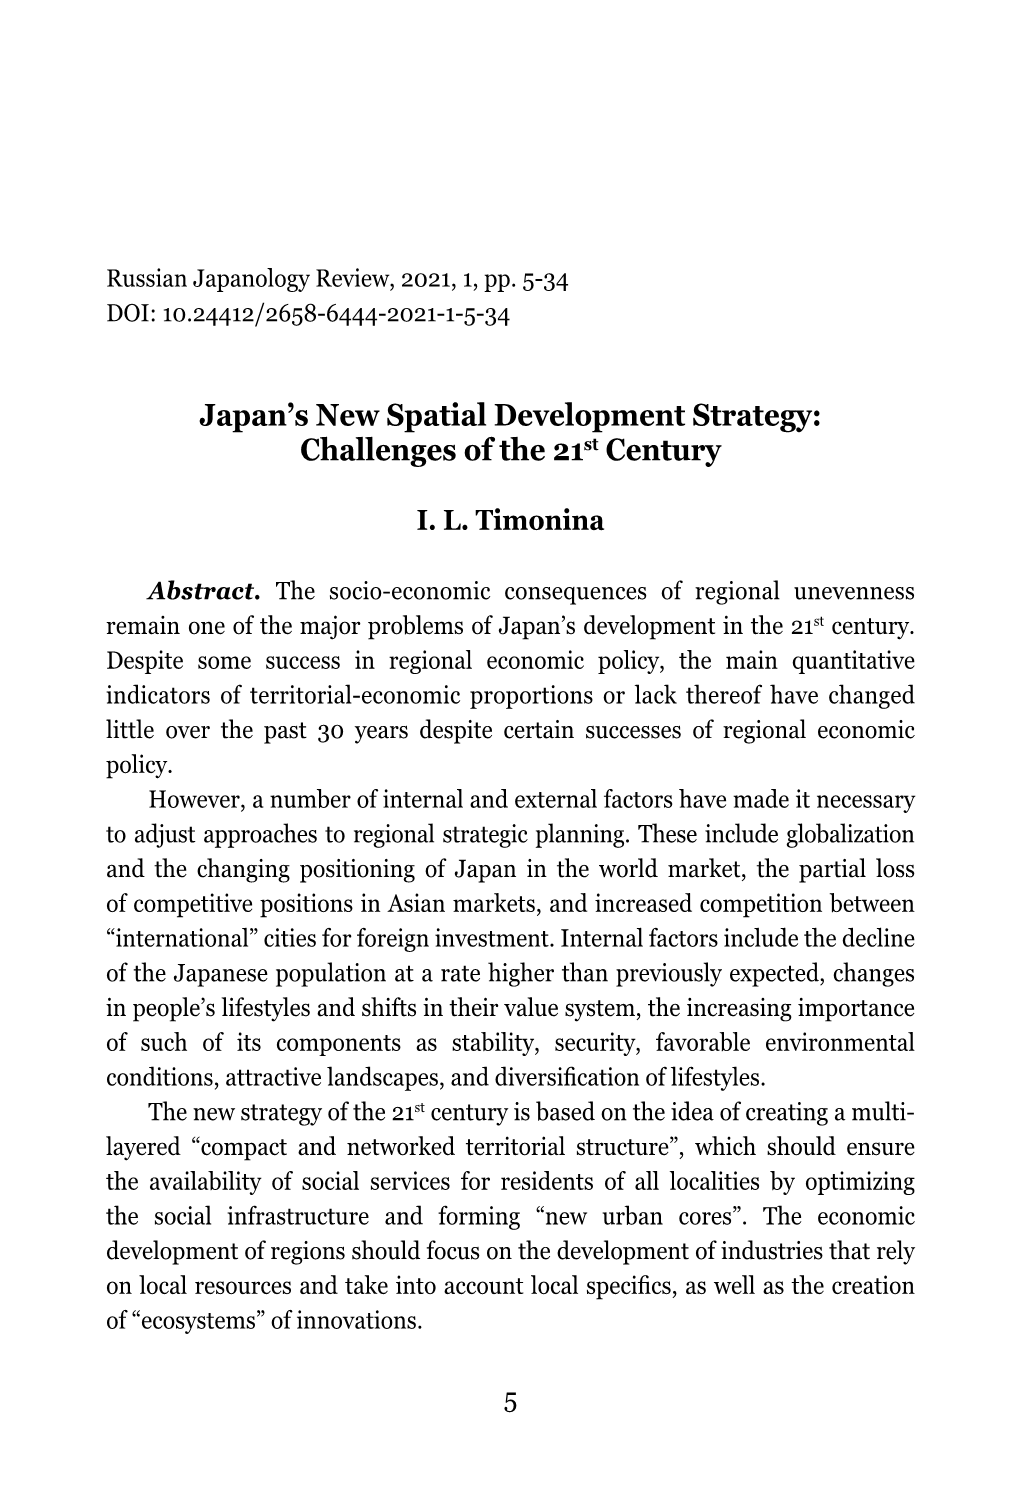 Japan's New Spatial Development Strategy